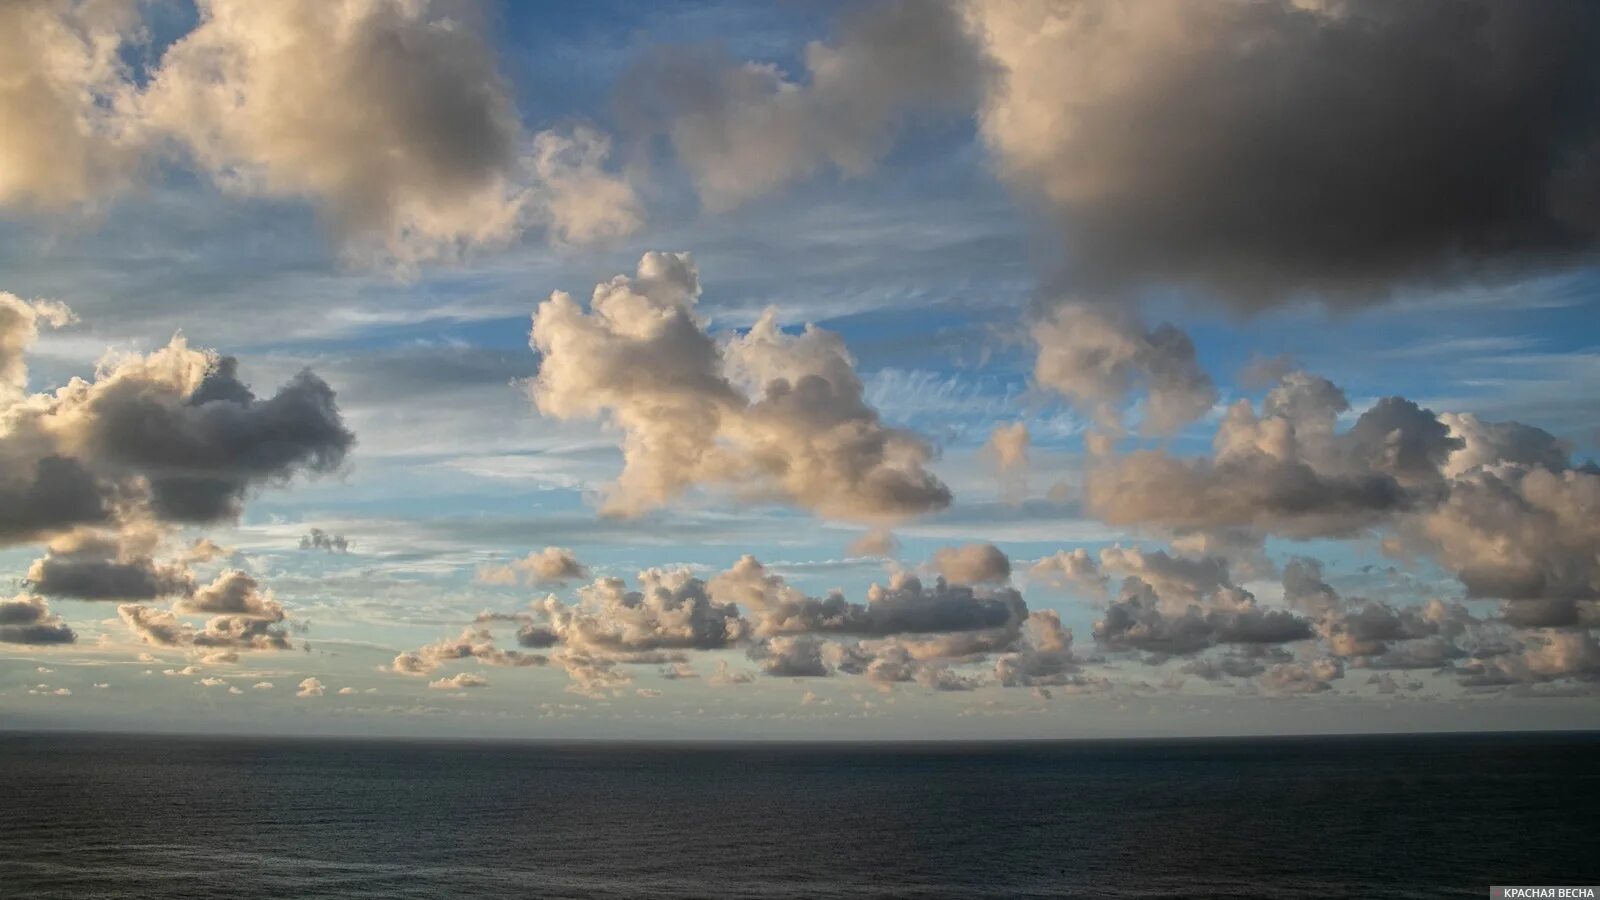 Облака над морем. Облака и море тучи. Облачное море границы. Картинка облачно с прояснениями.